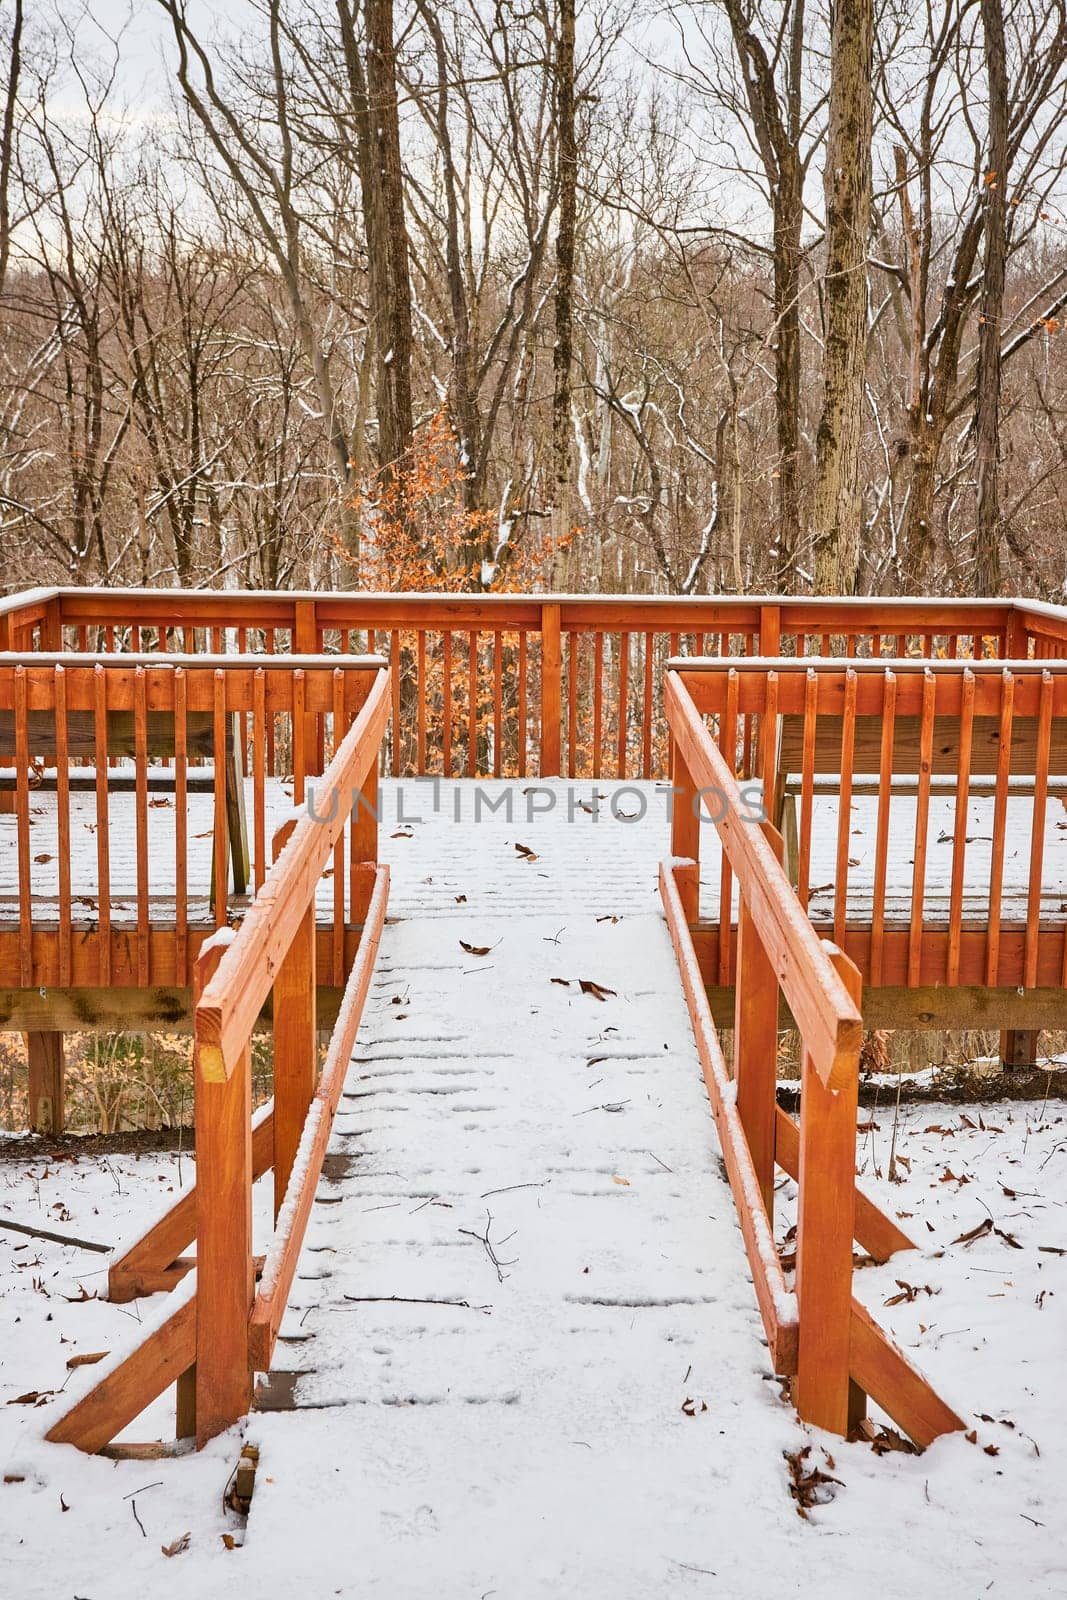 Snowy Bliss in Whitehurst Nature Preserves, Indiana - A Wooden Boardwalk Meandering Through a Winter Wonderland